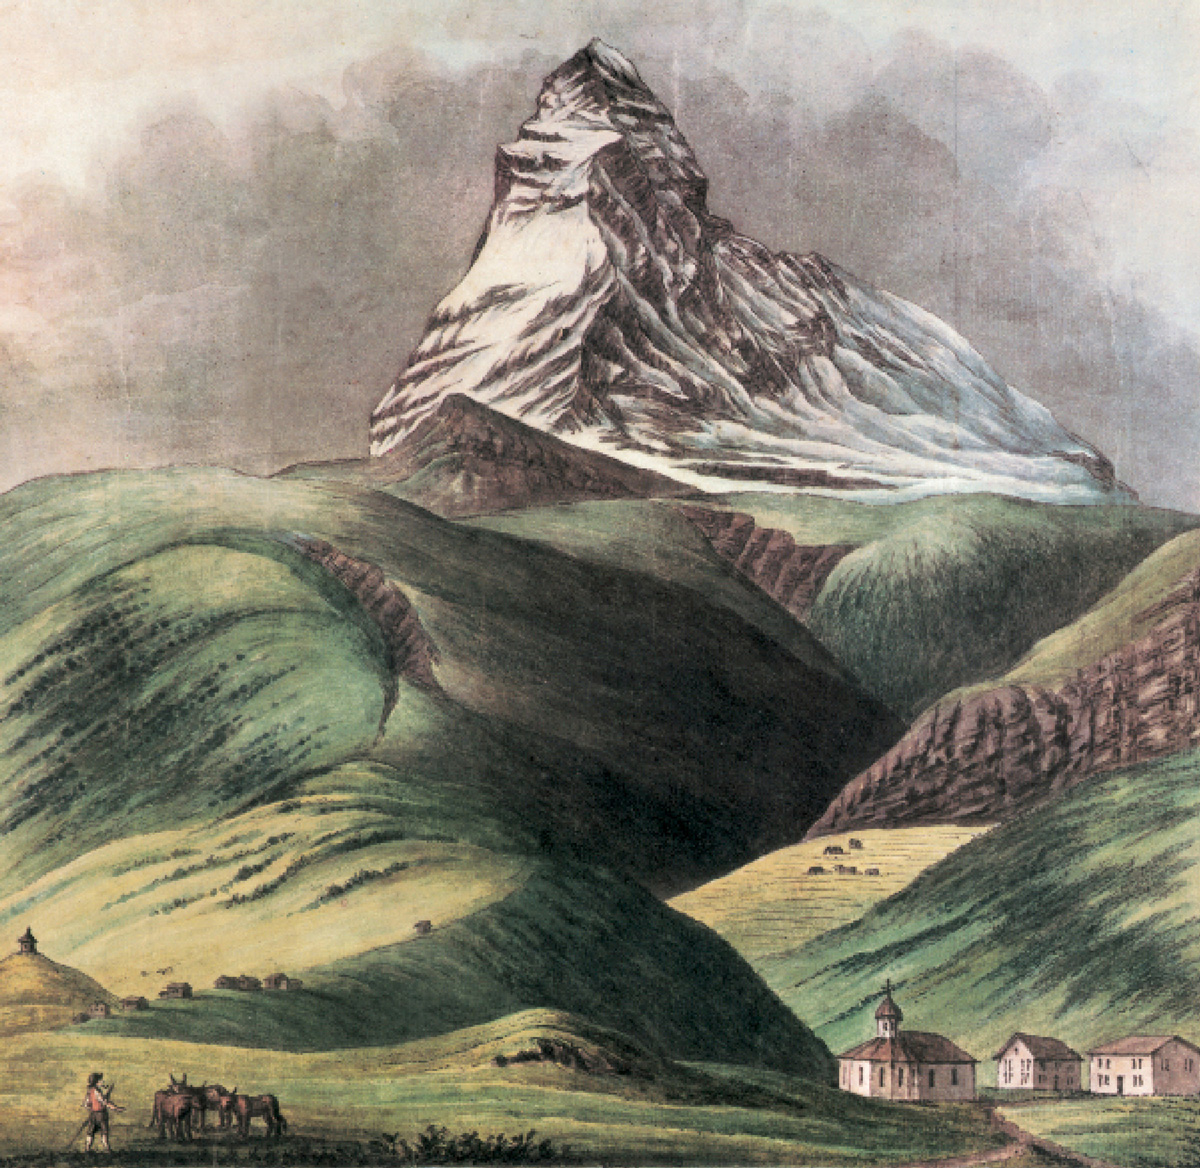 A view of the Matterhorn from the St. Niklaus Valley, drawn by Hans Conrad Escher, 14 August eighteen oh six.